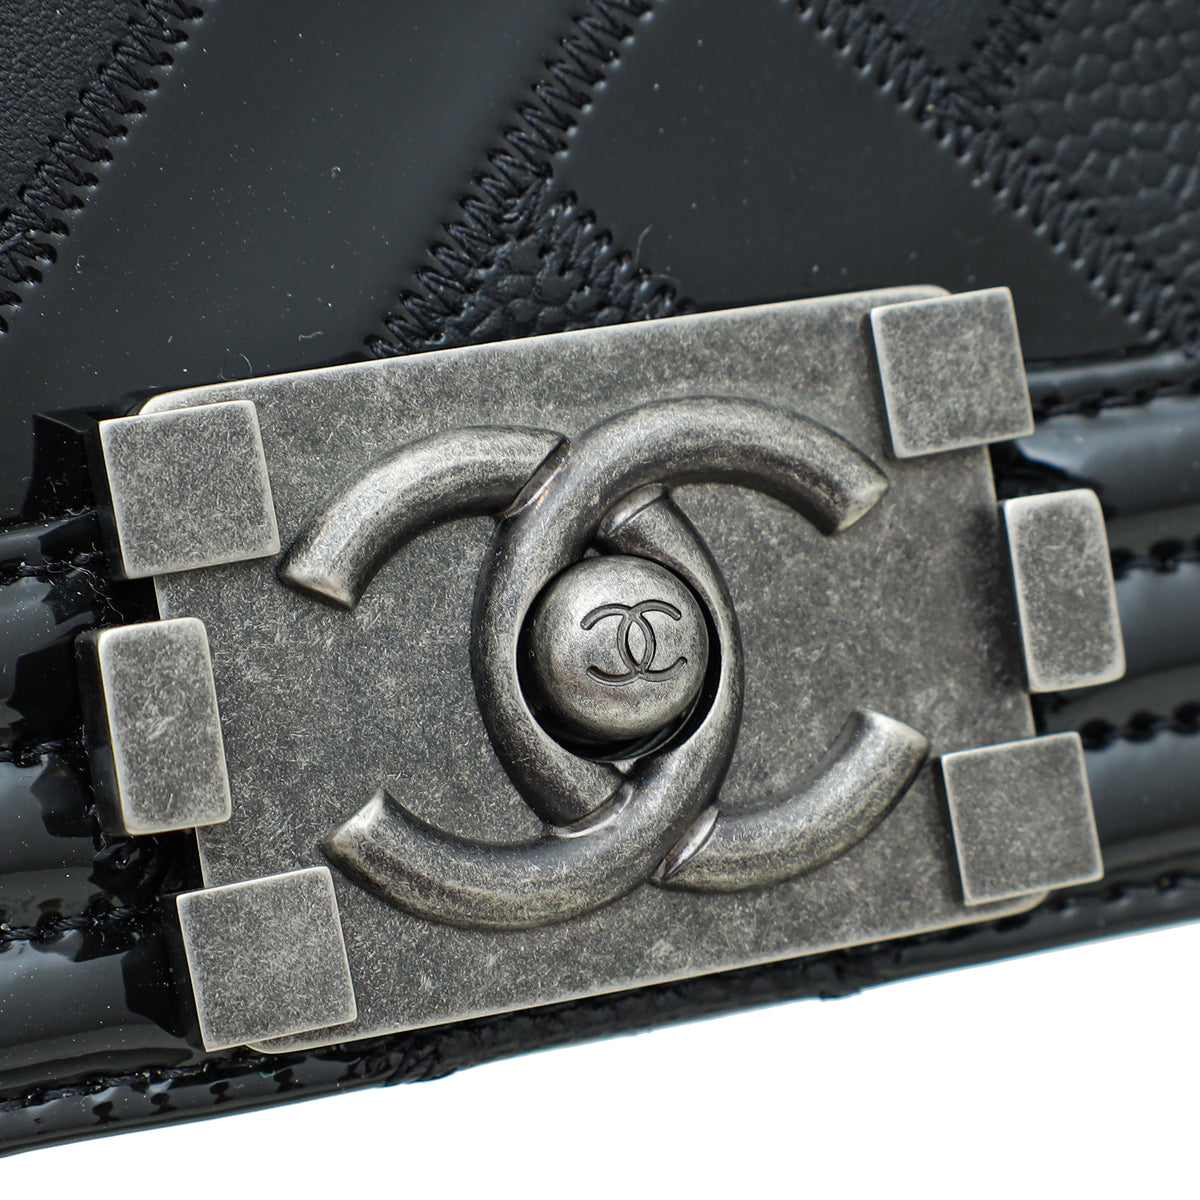 Chanel Black Le Boy Diamond Quilted Medium Flap Bag